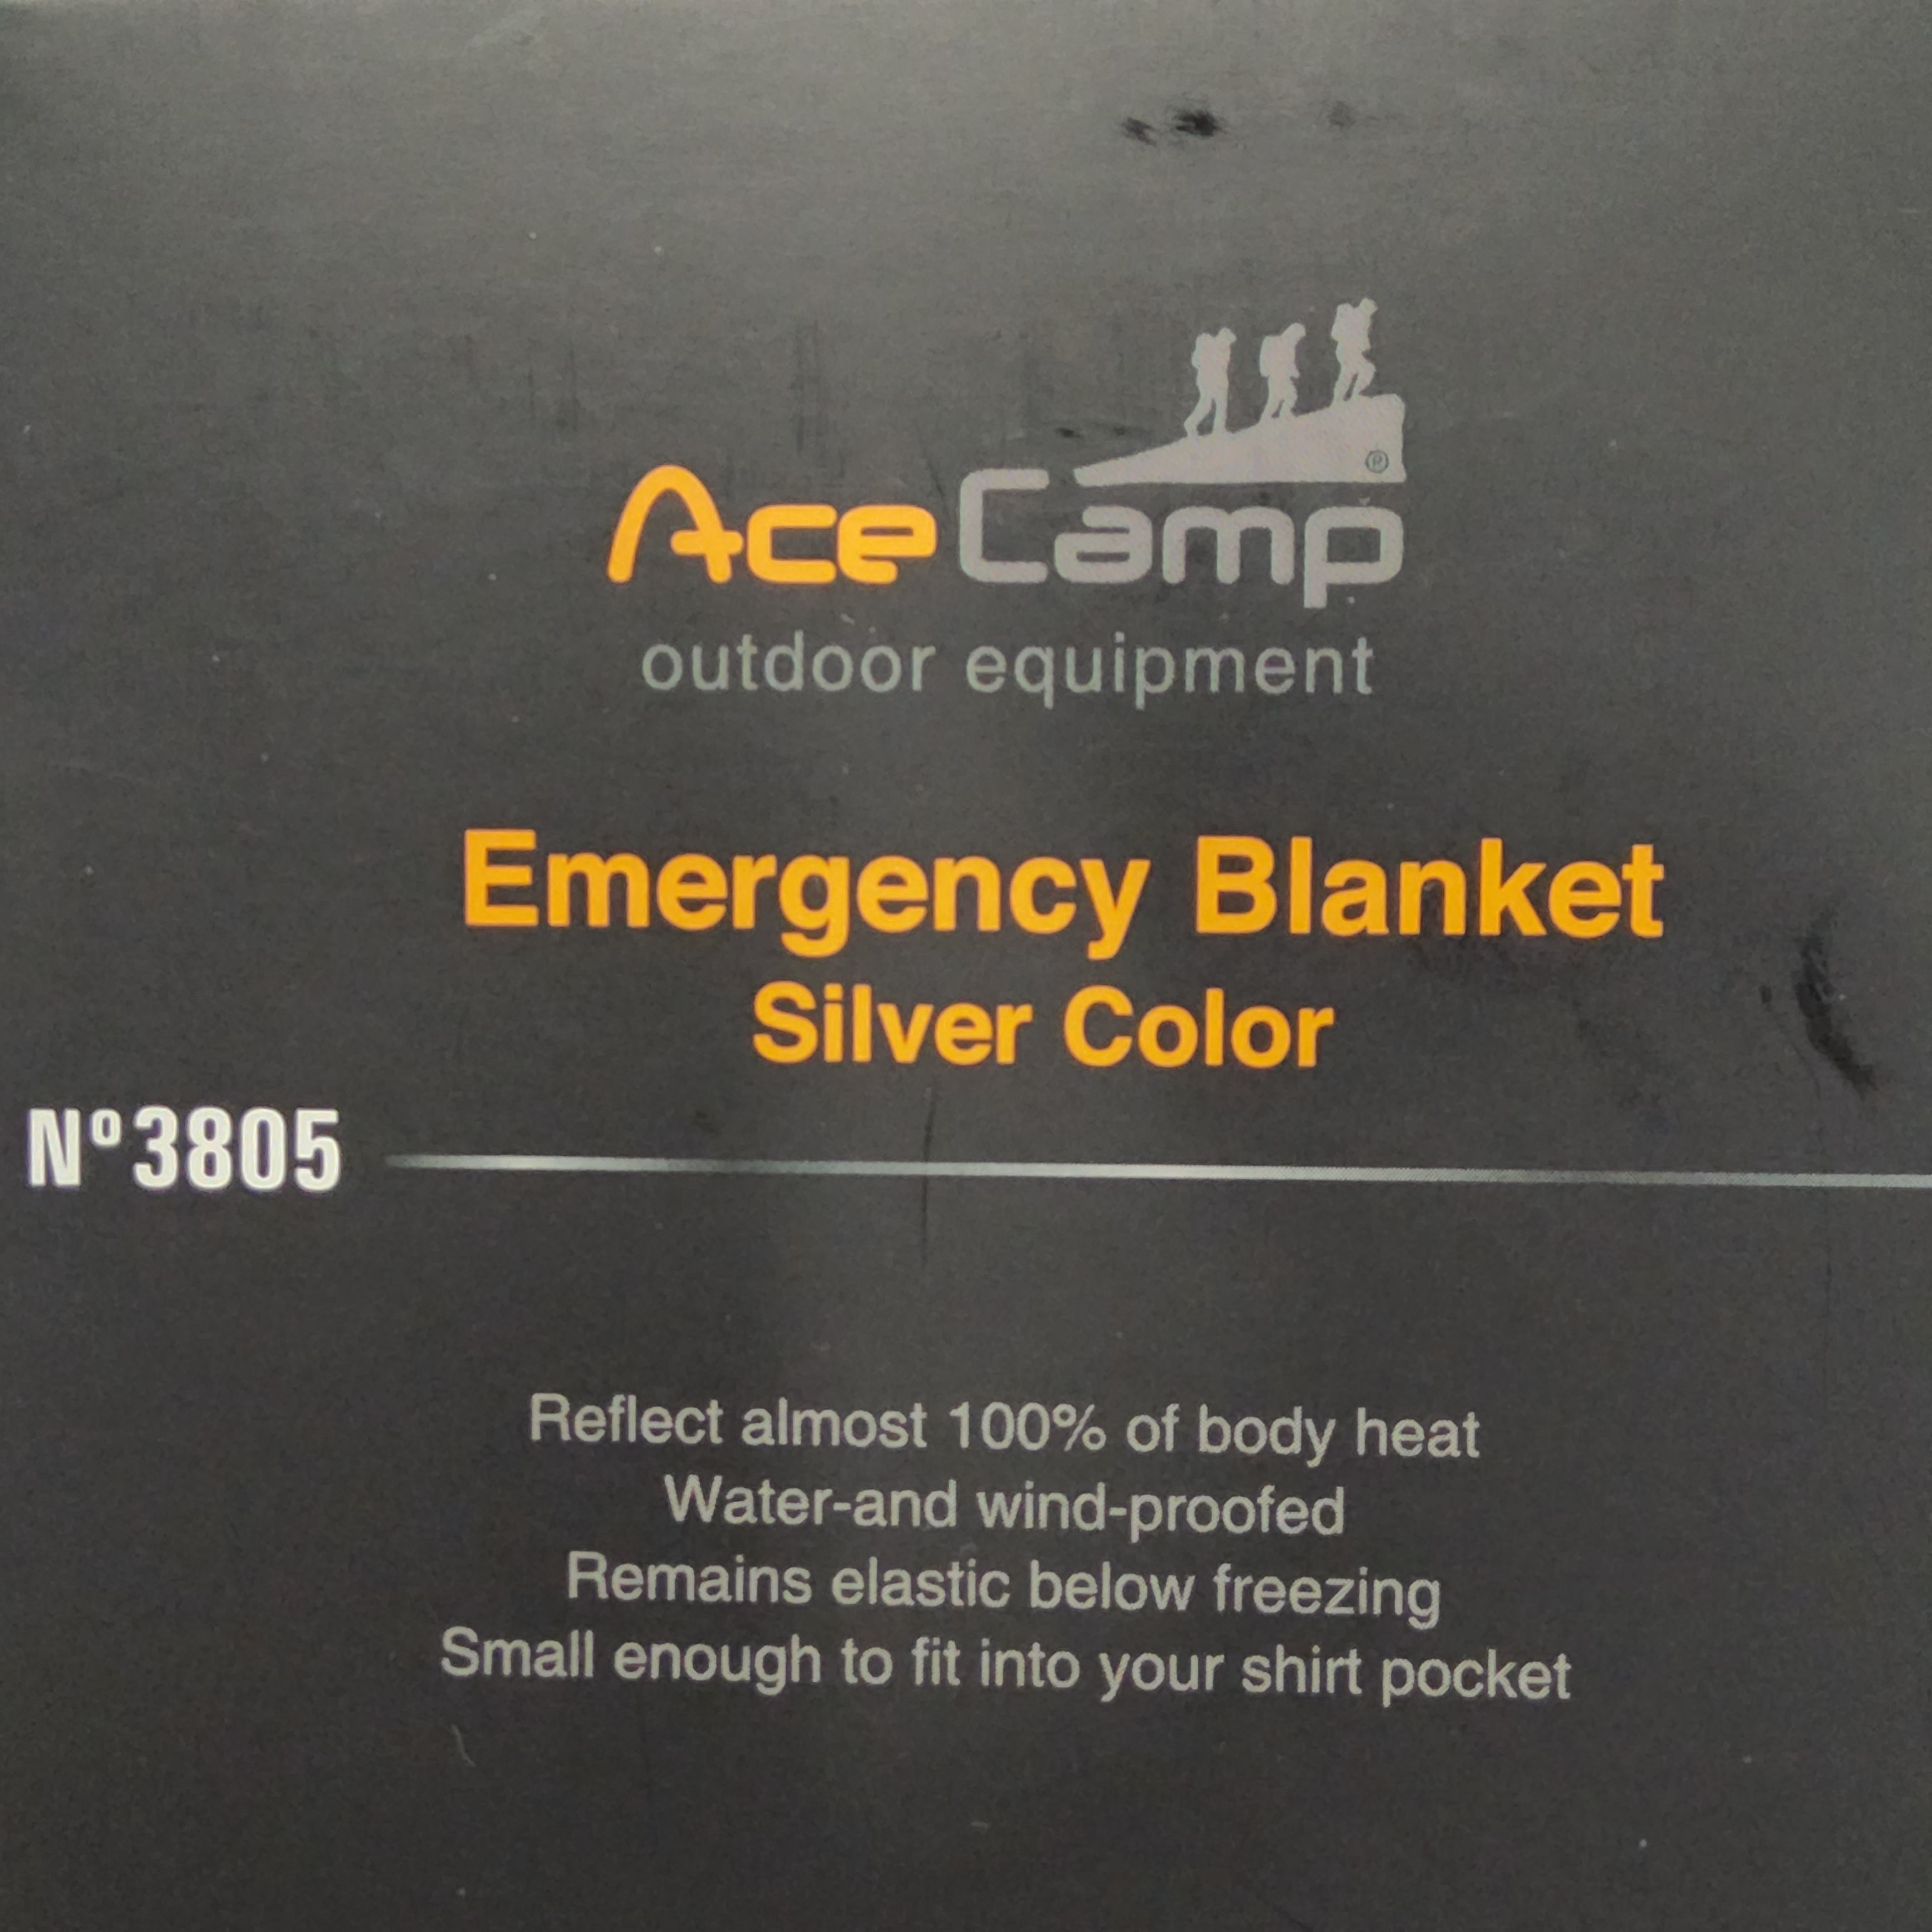 Ace Camp Emergency Blanket #3805